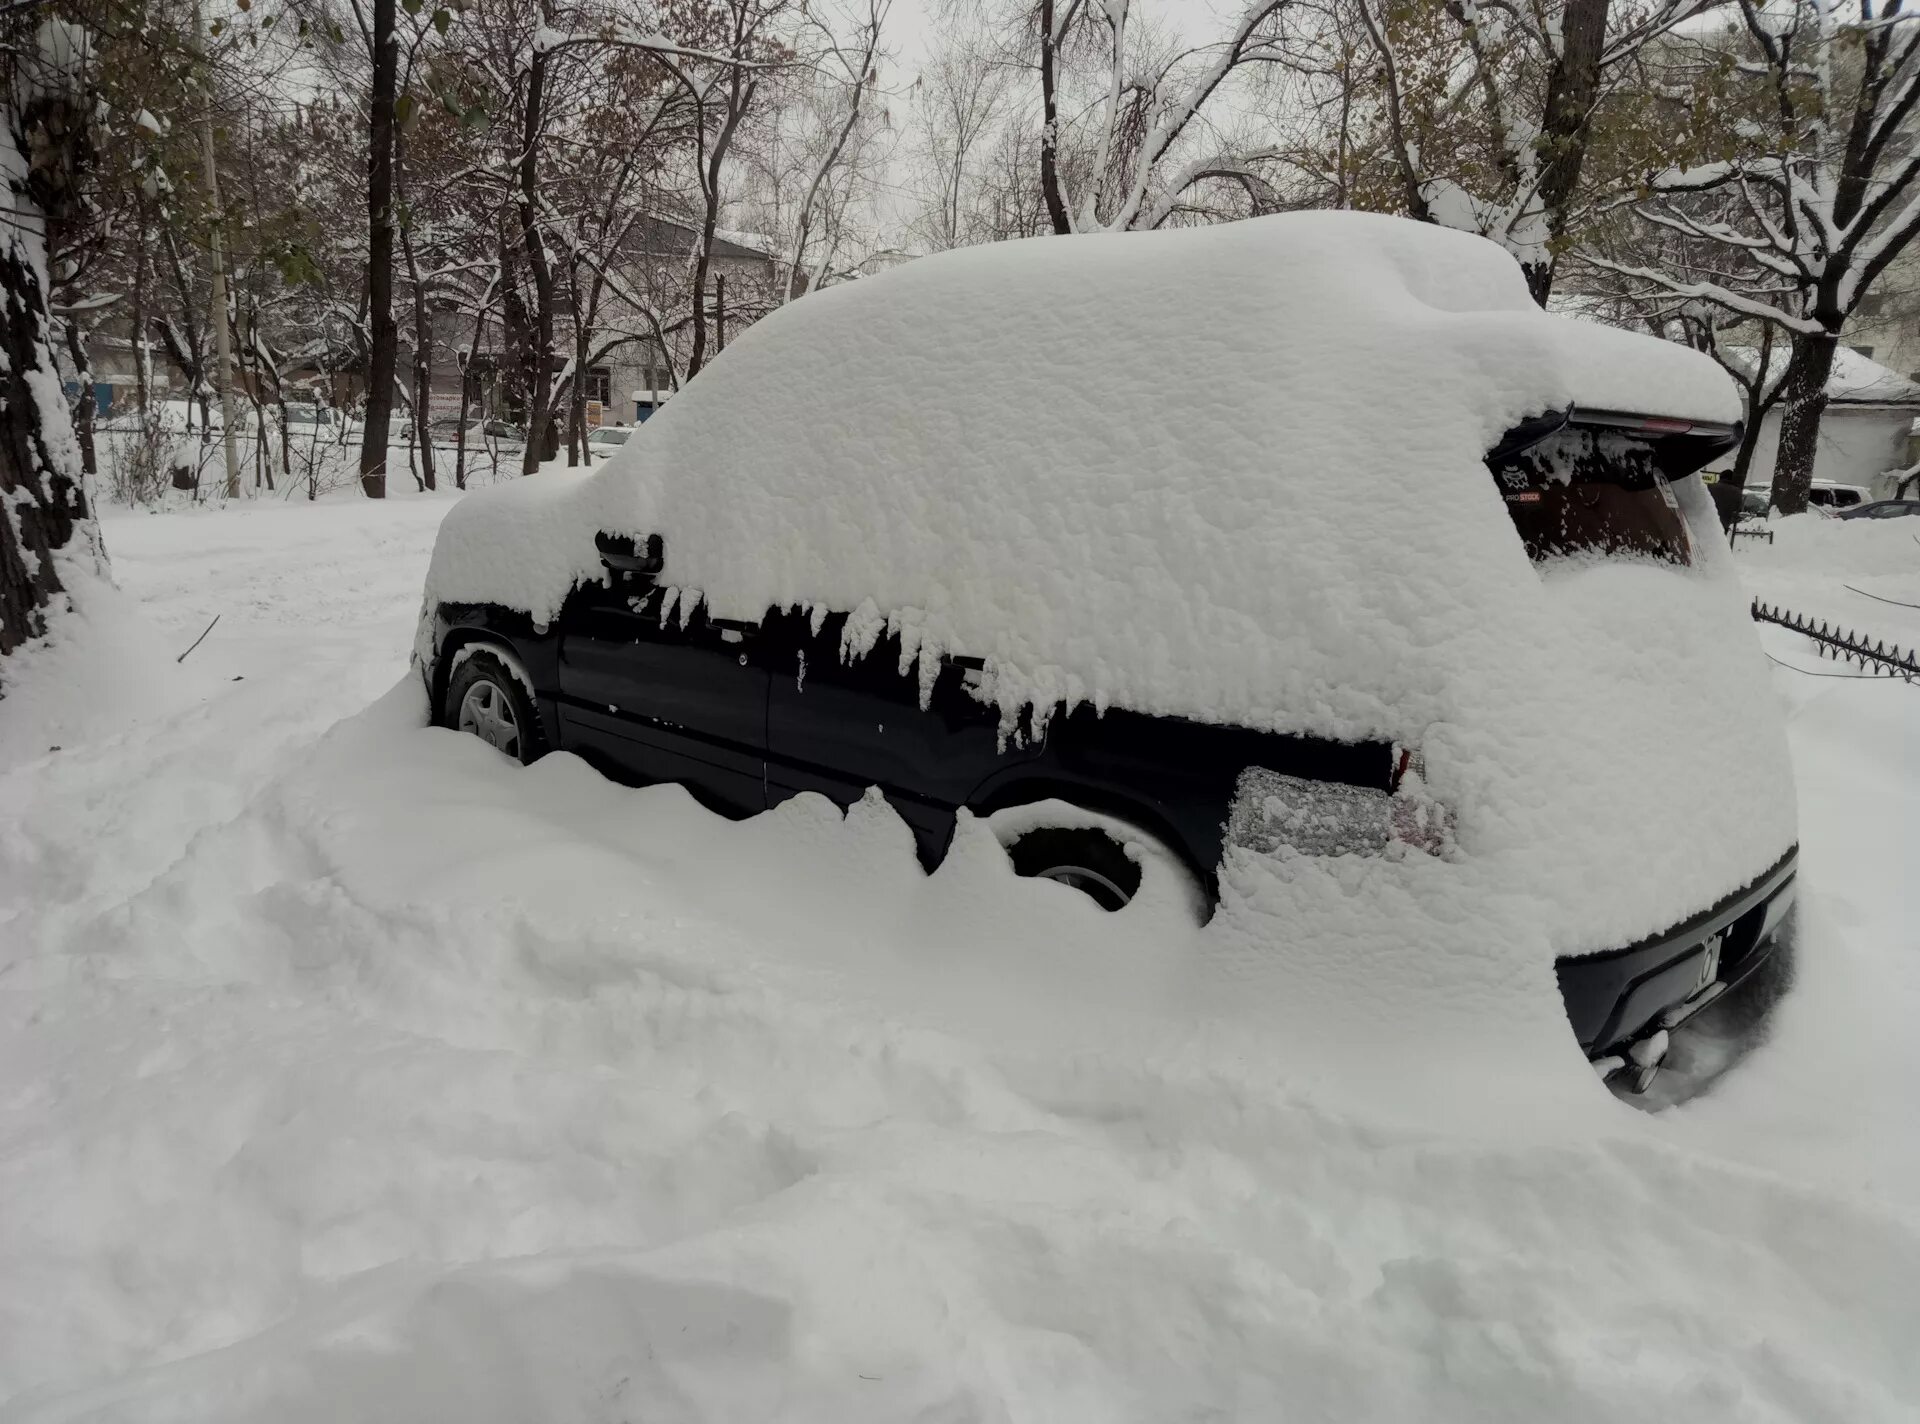 Машина завалена снегом. Снеговая машина. Машина в сугробе. Машина в снегу.